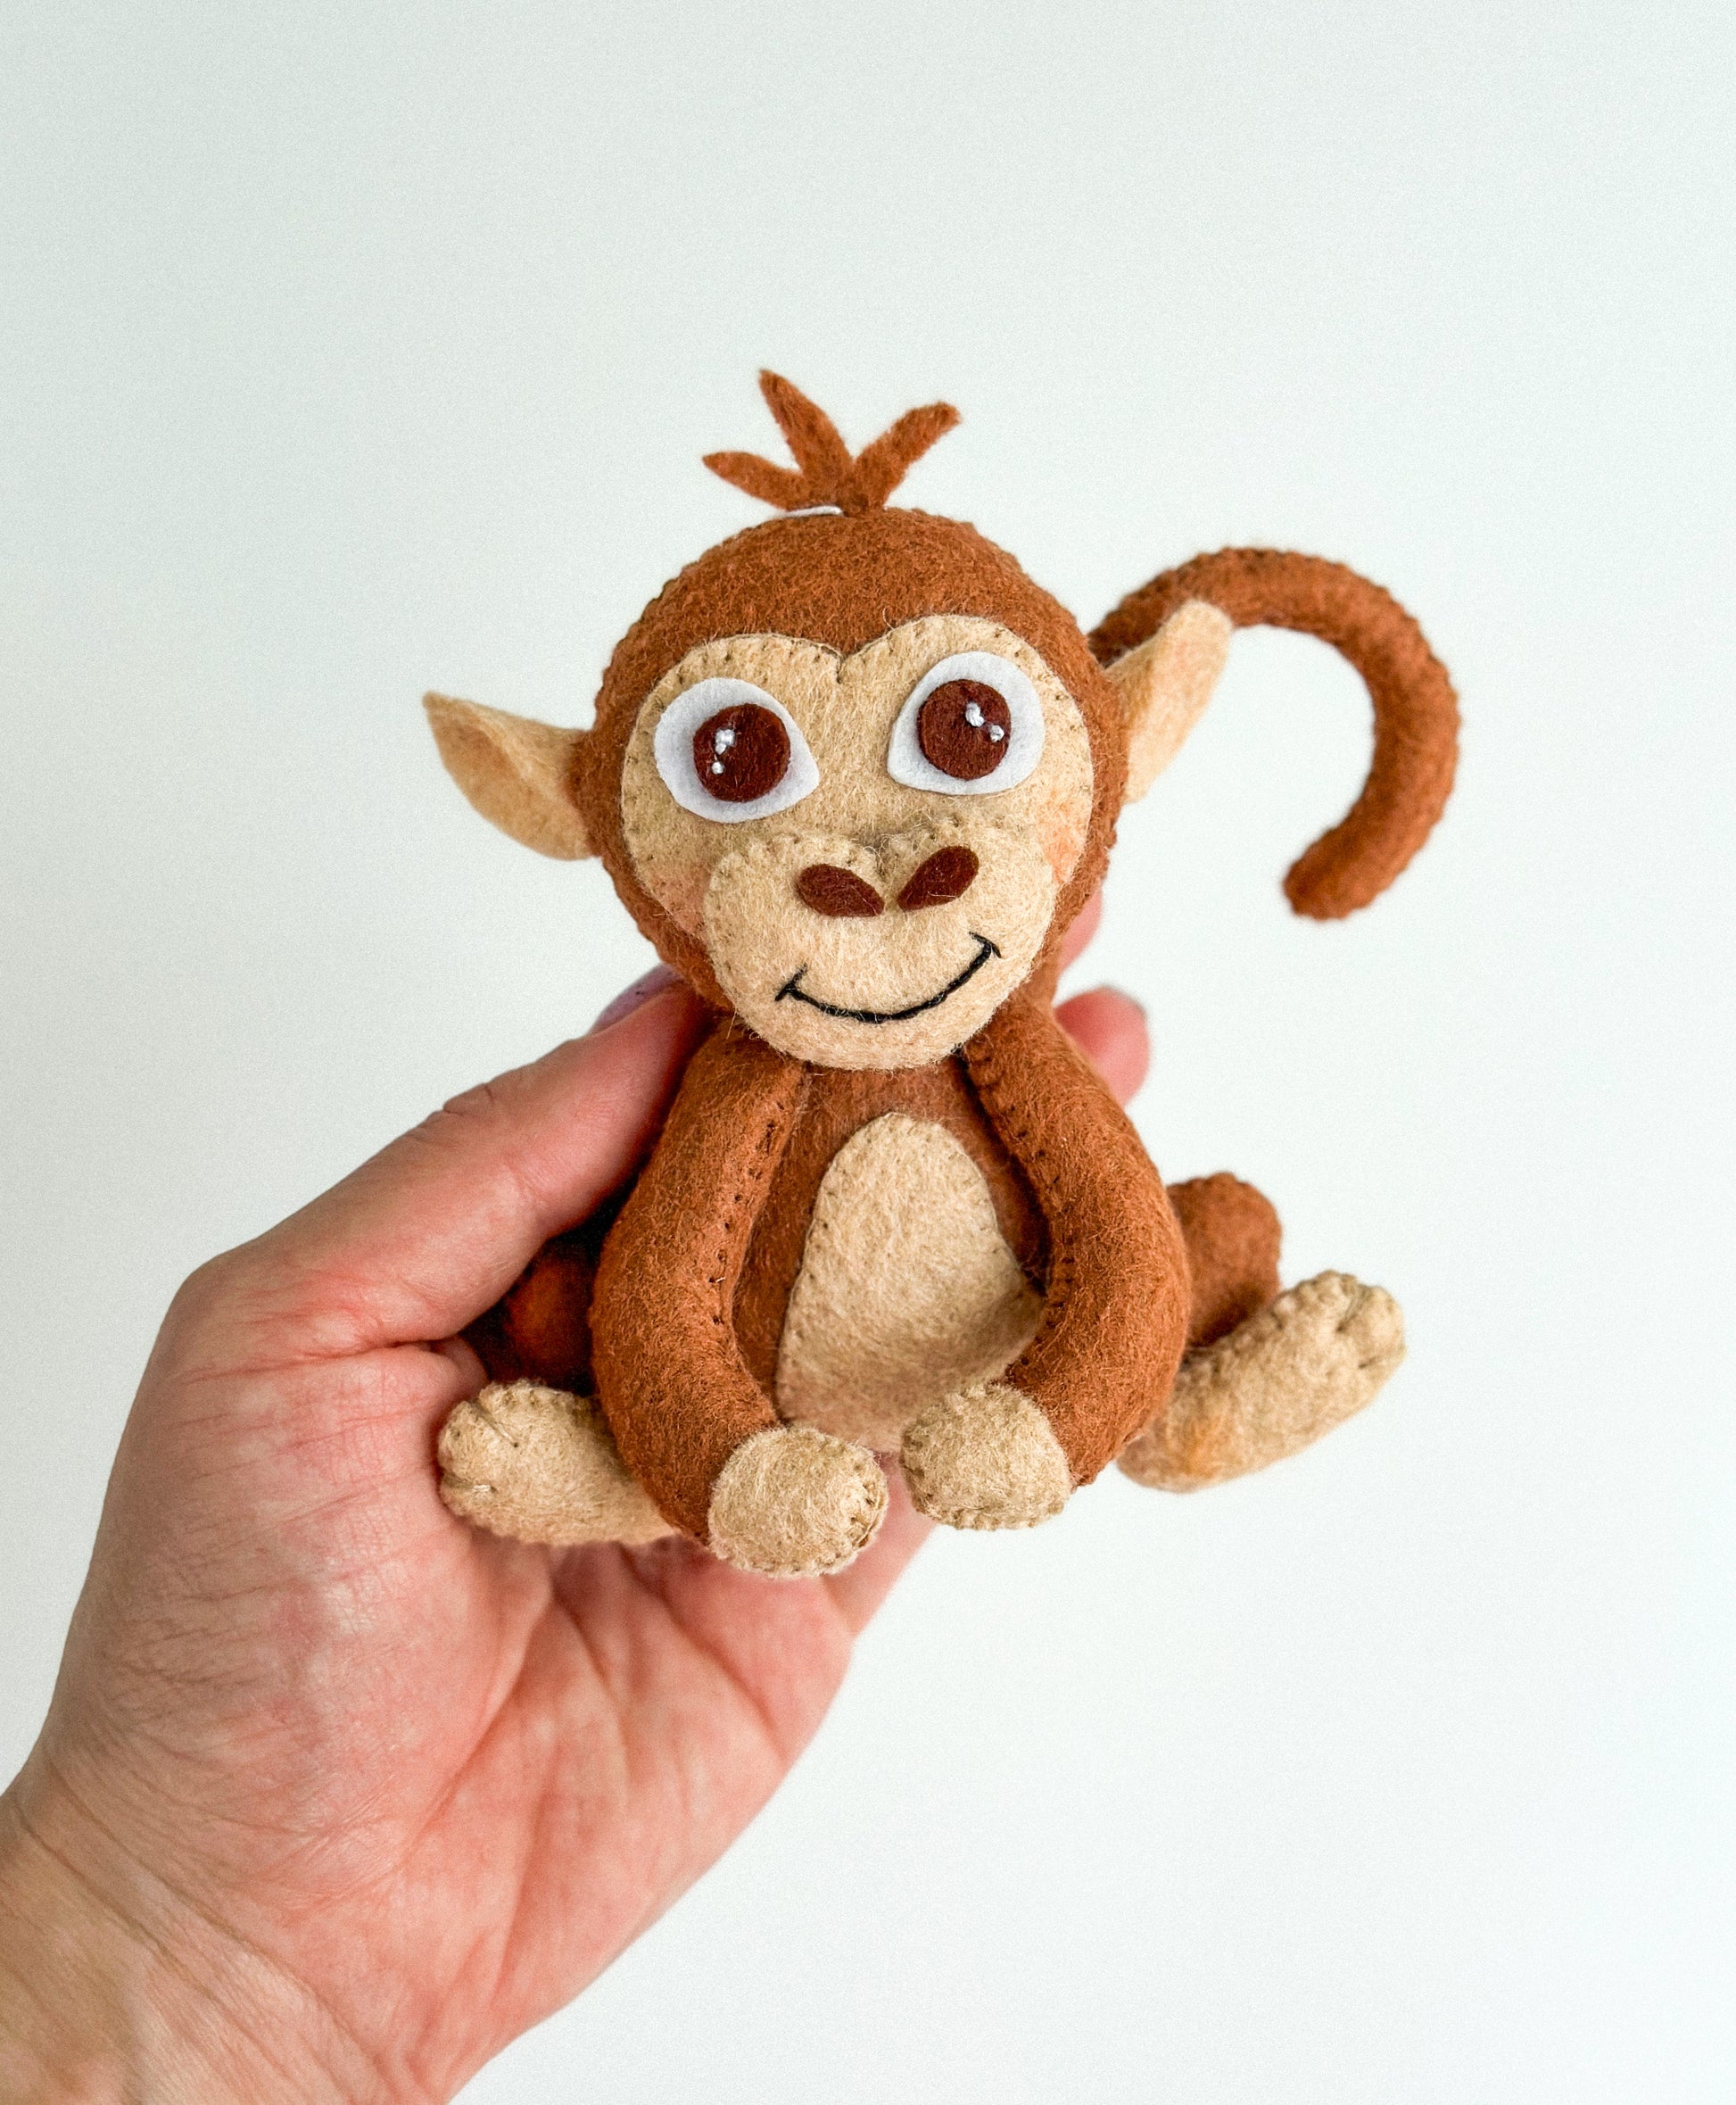 Handcrafted Felt Monkey Ornament